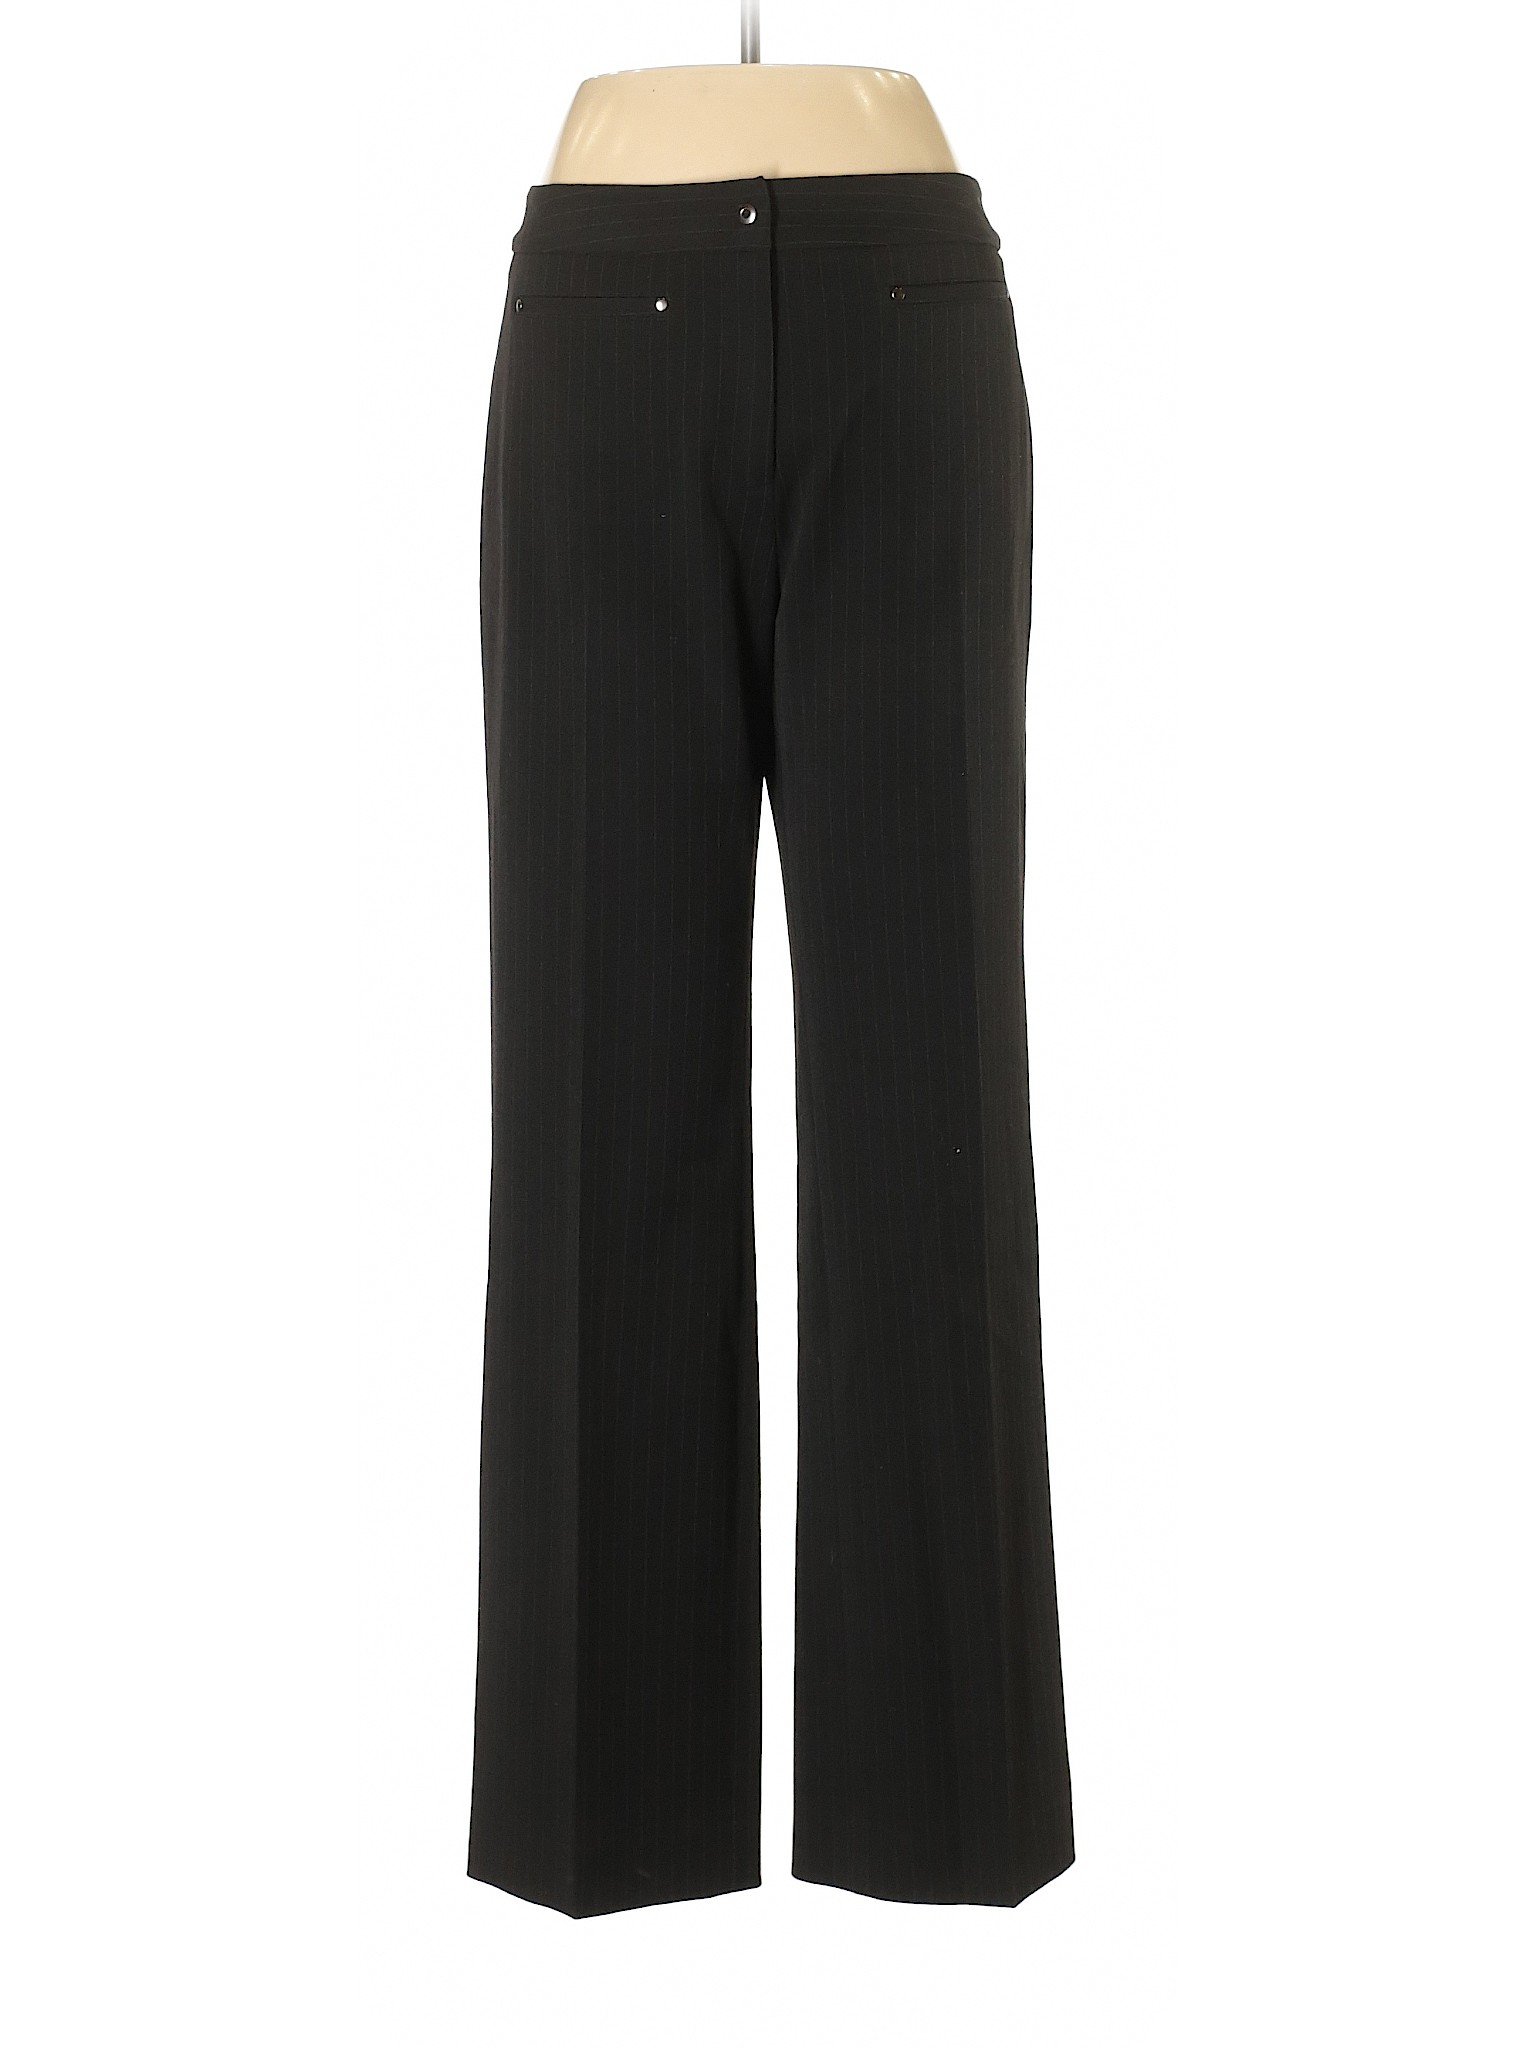 Elliott Lauren Women Black Dress Pants 6 | eBay